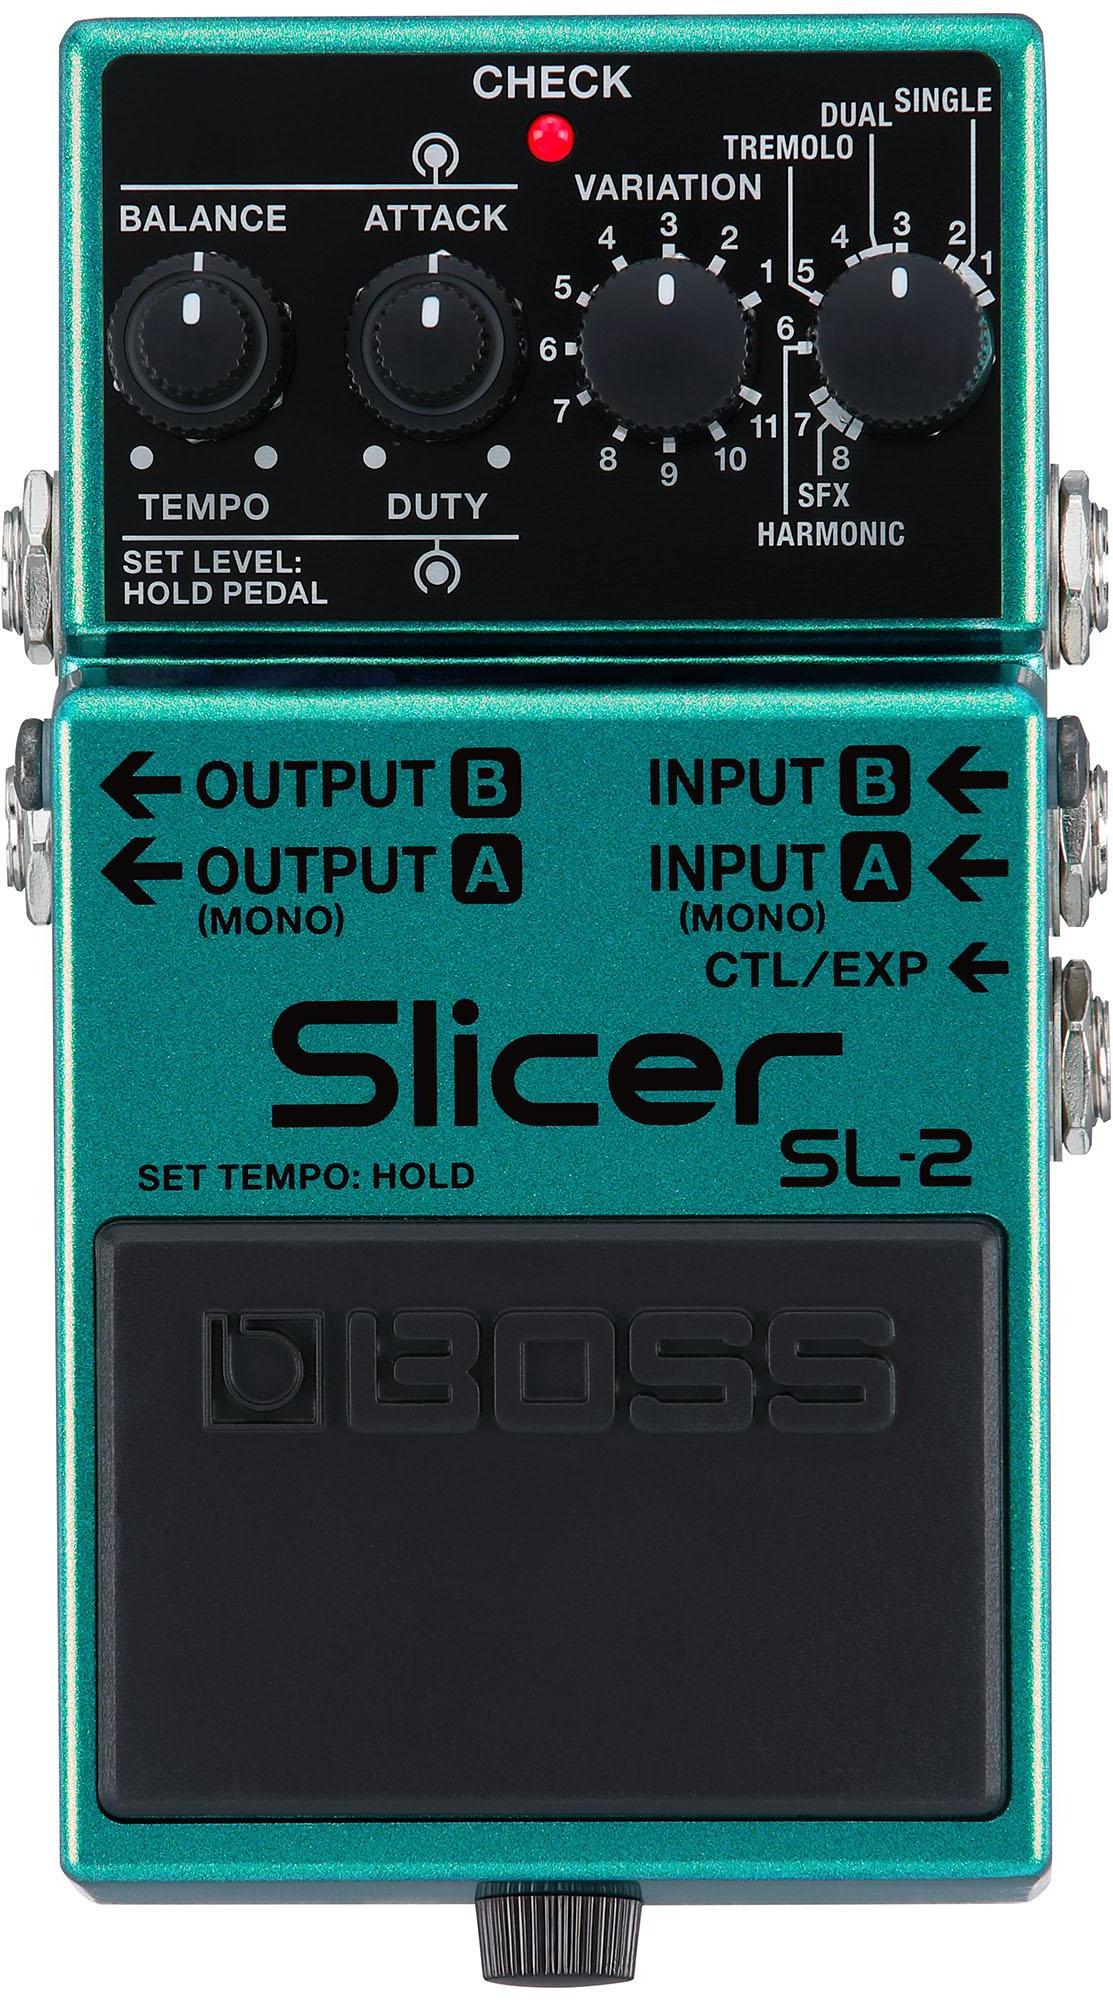 Pédale chorus / flanger / phaser / tremolo Boss SL-2 Slicer